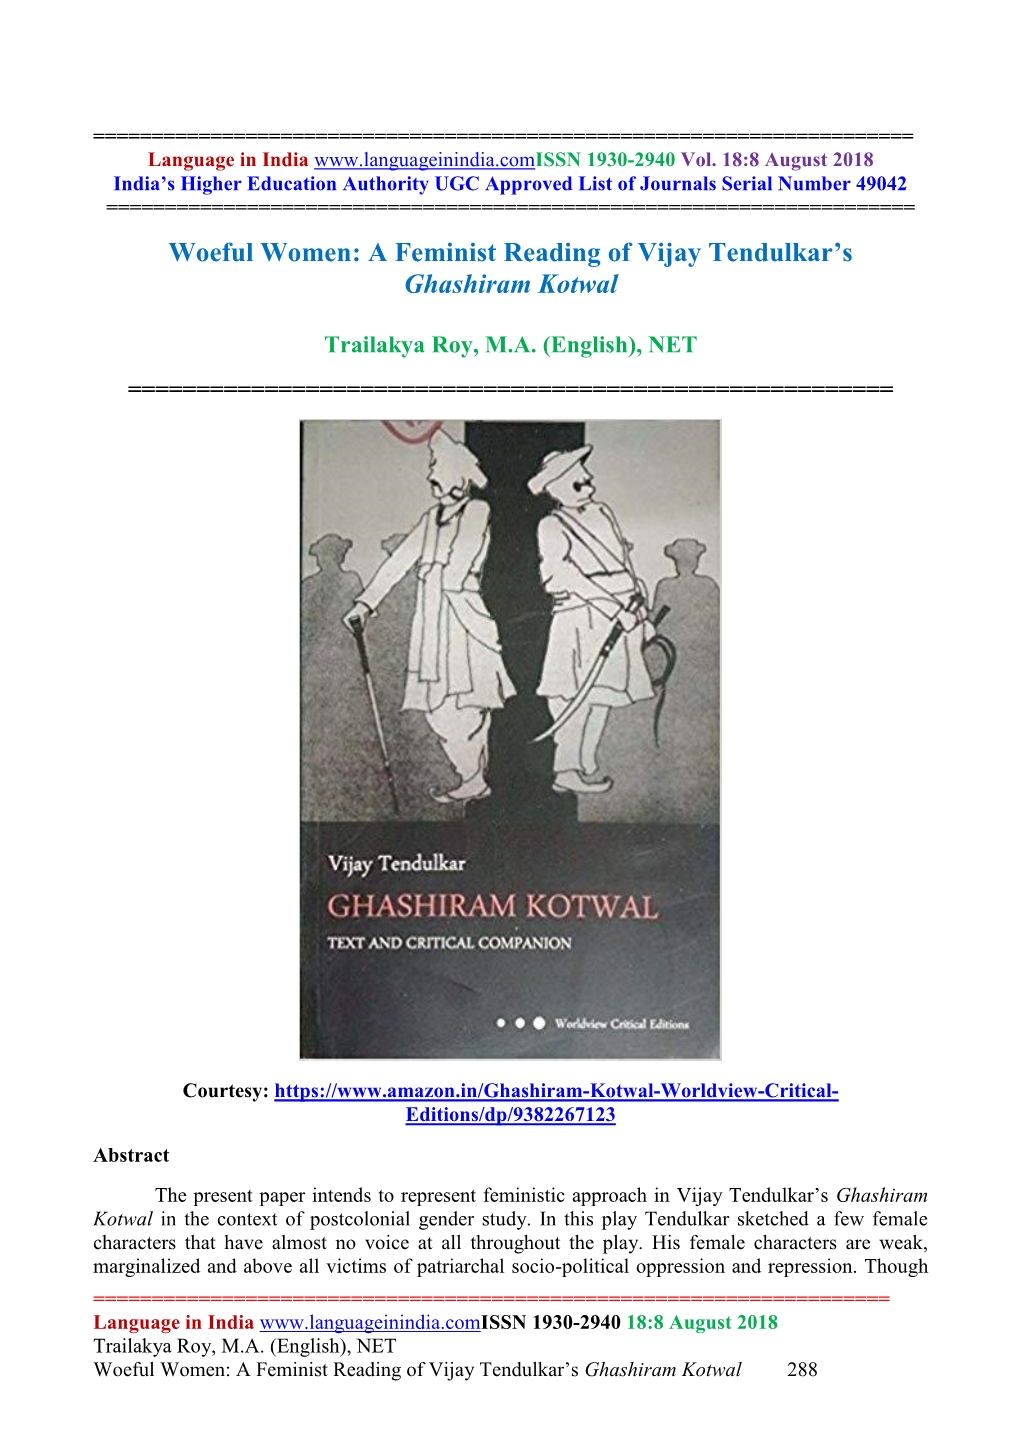 Woeful Women: a Feminist Reading of Vijay Tendulkar's Ghashiram Kotwal